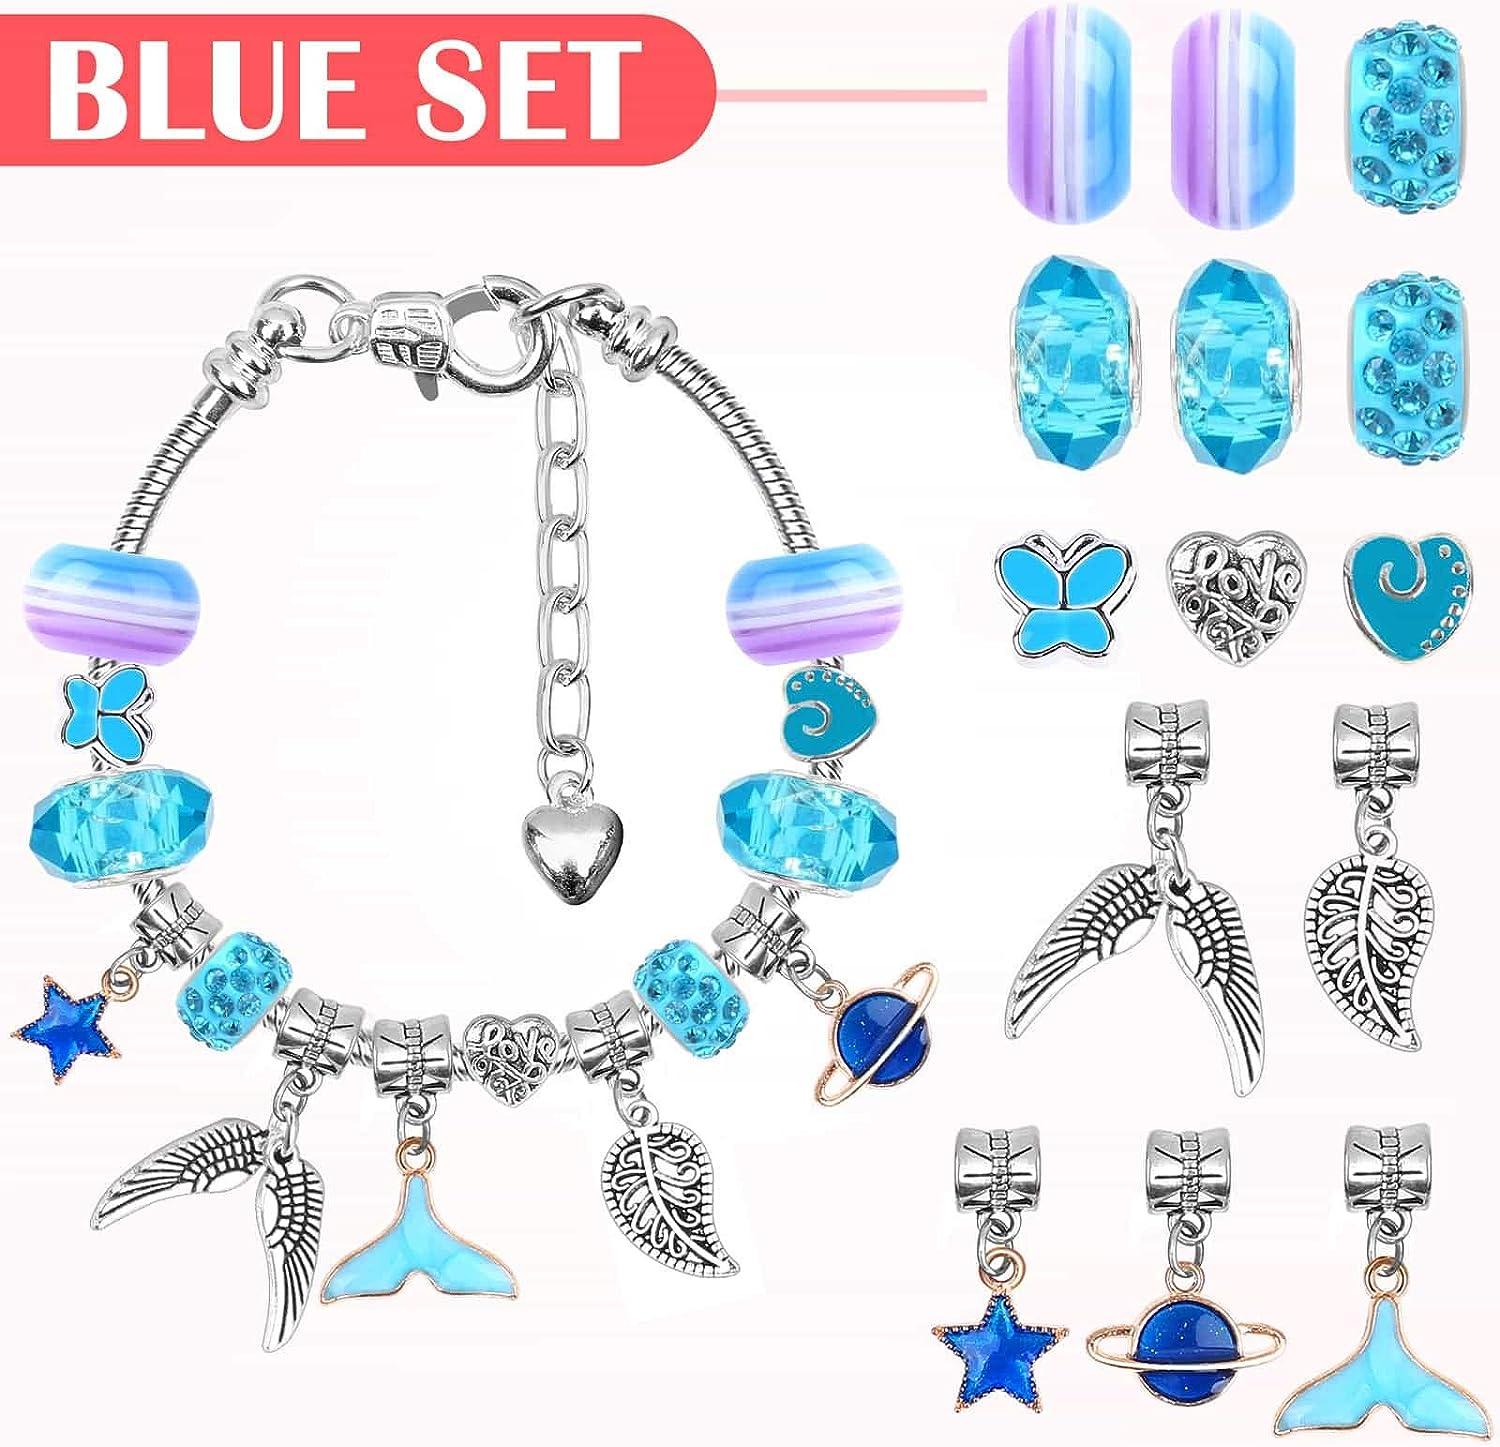 Acejoz 85 Pcs Charm Bracelet Making Kit DIY Charm Bracelets Beads for Girls  Adults and Beginner Jewelry Making Kit